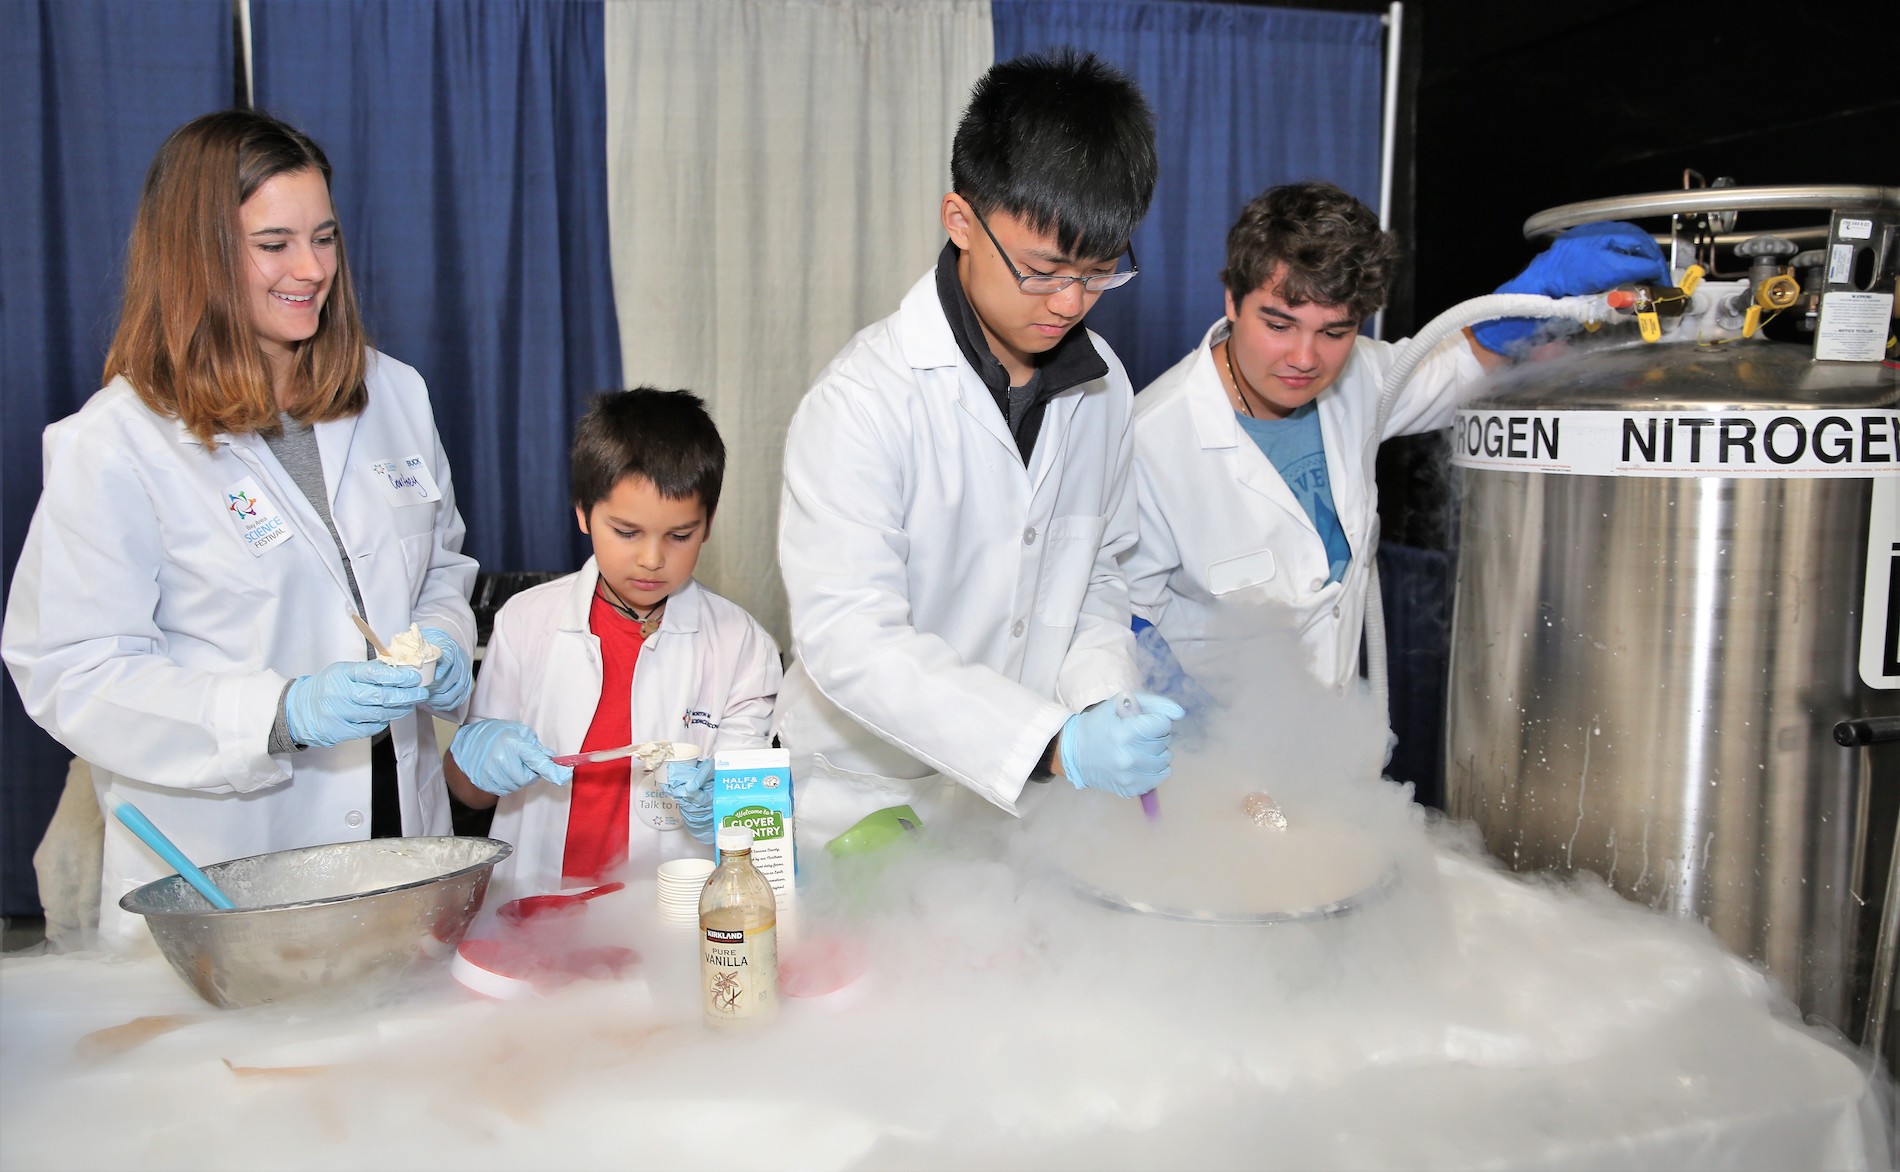 kids in lab coats